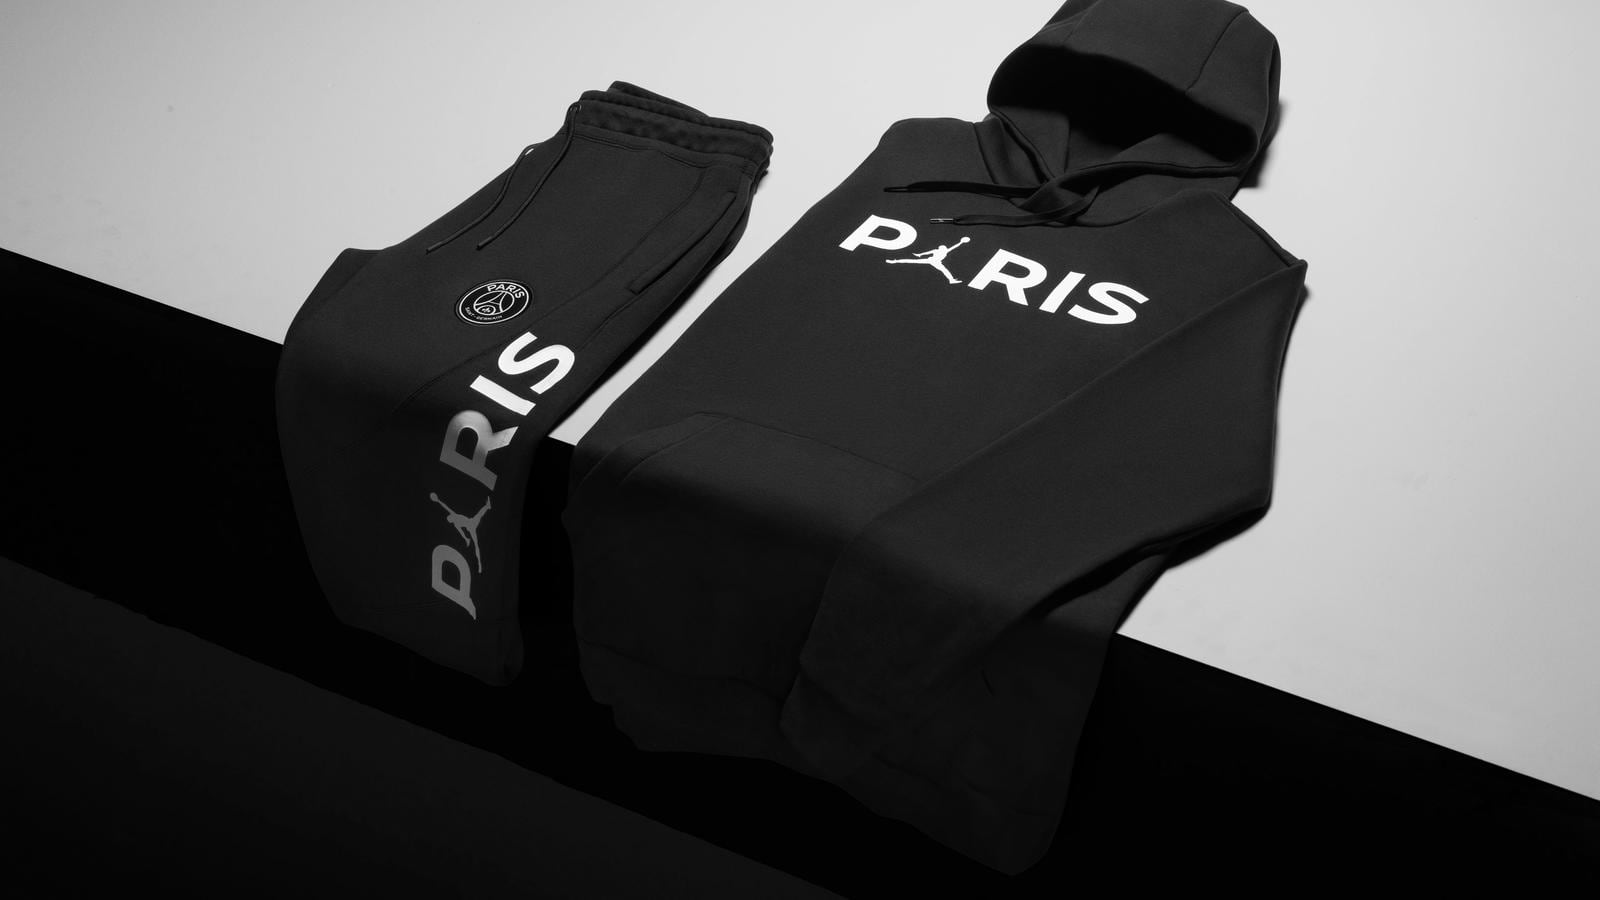 Paris Saint-Germain and Jordan Brand collaborate, and SNS sets the